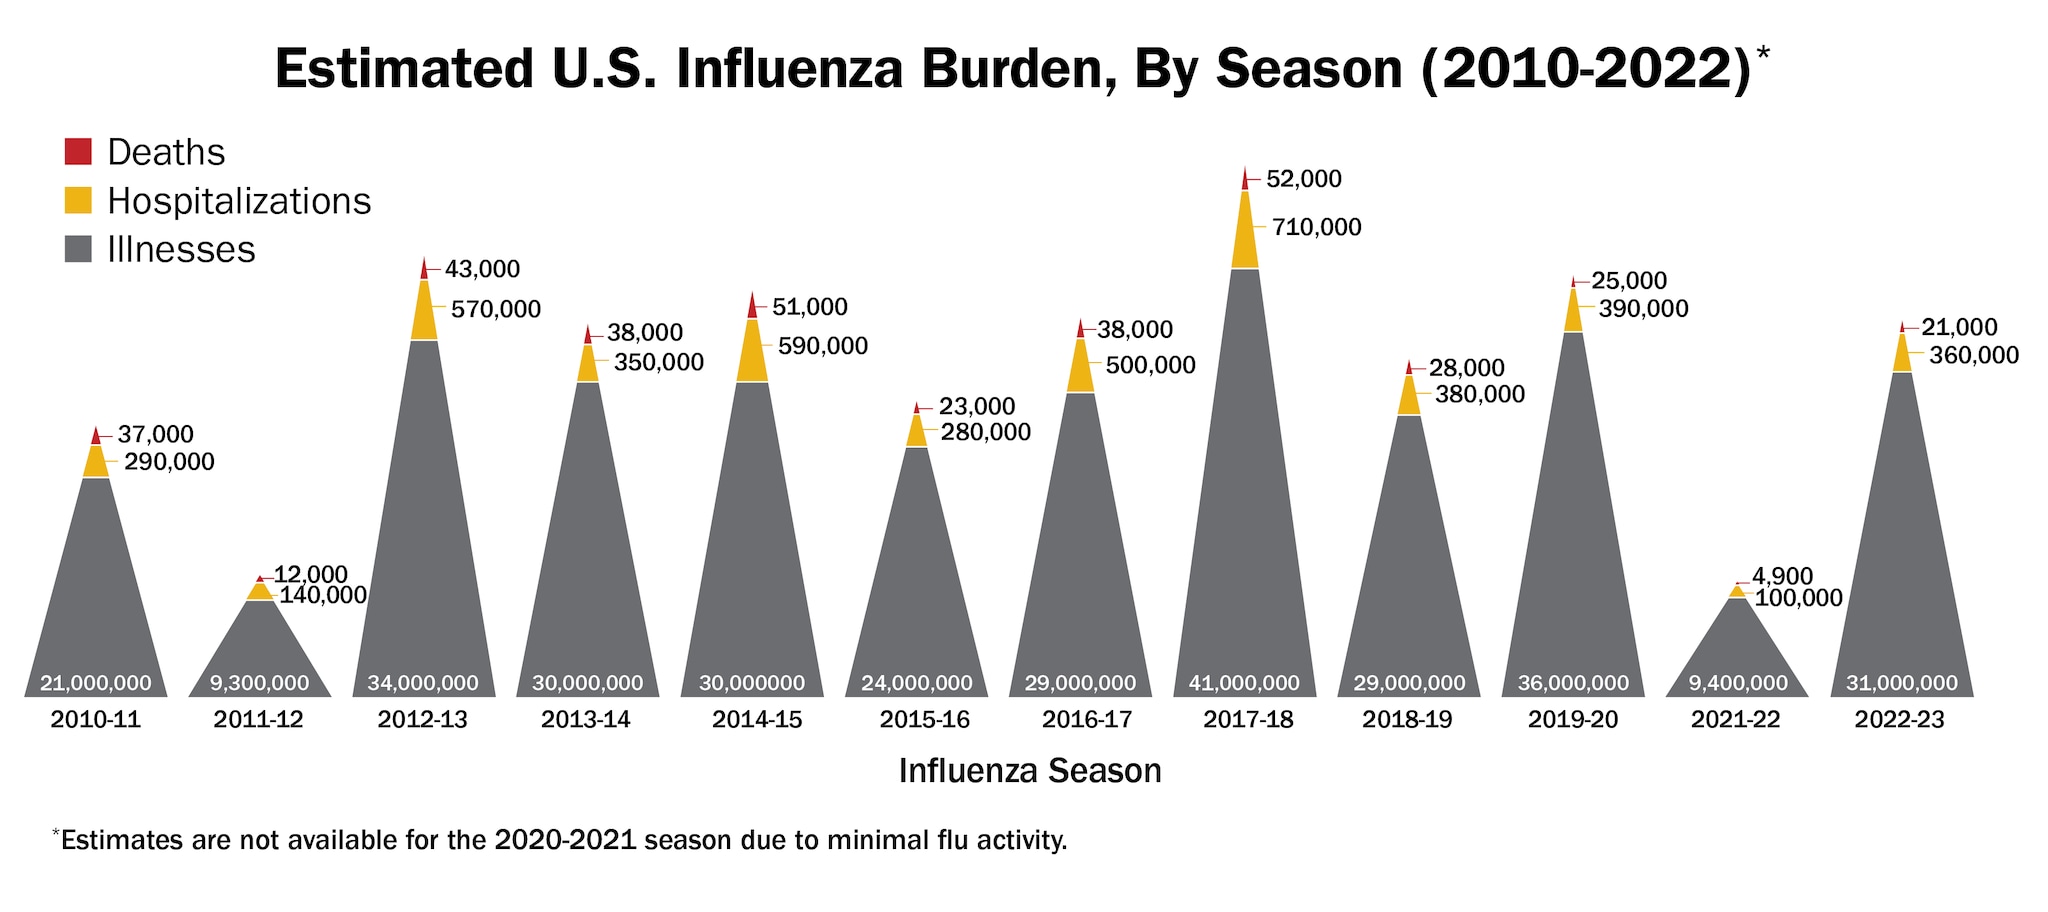 Estimated U.S. Influenza Burden, By Season (2010-2022)